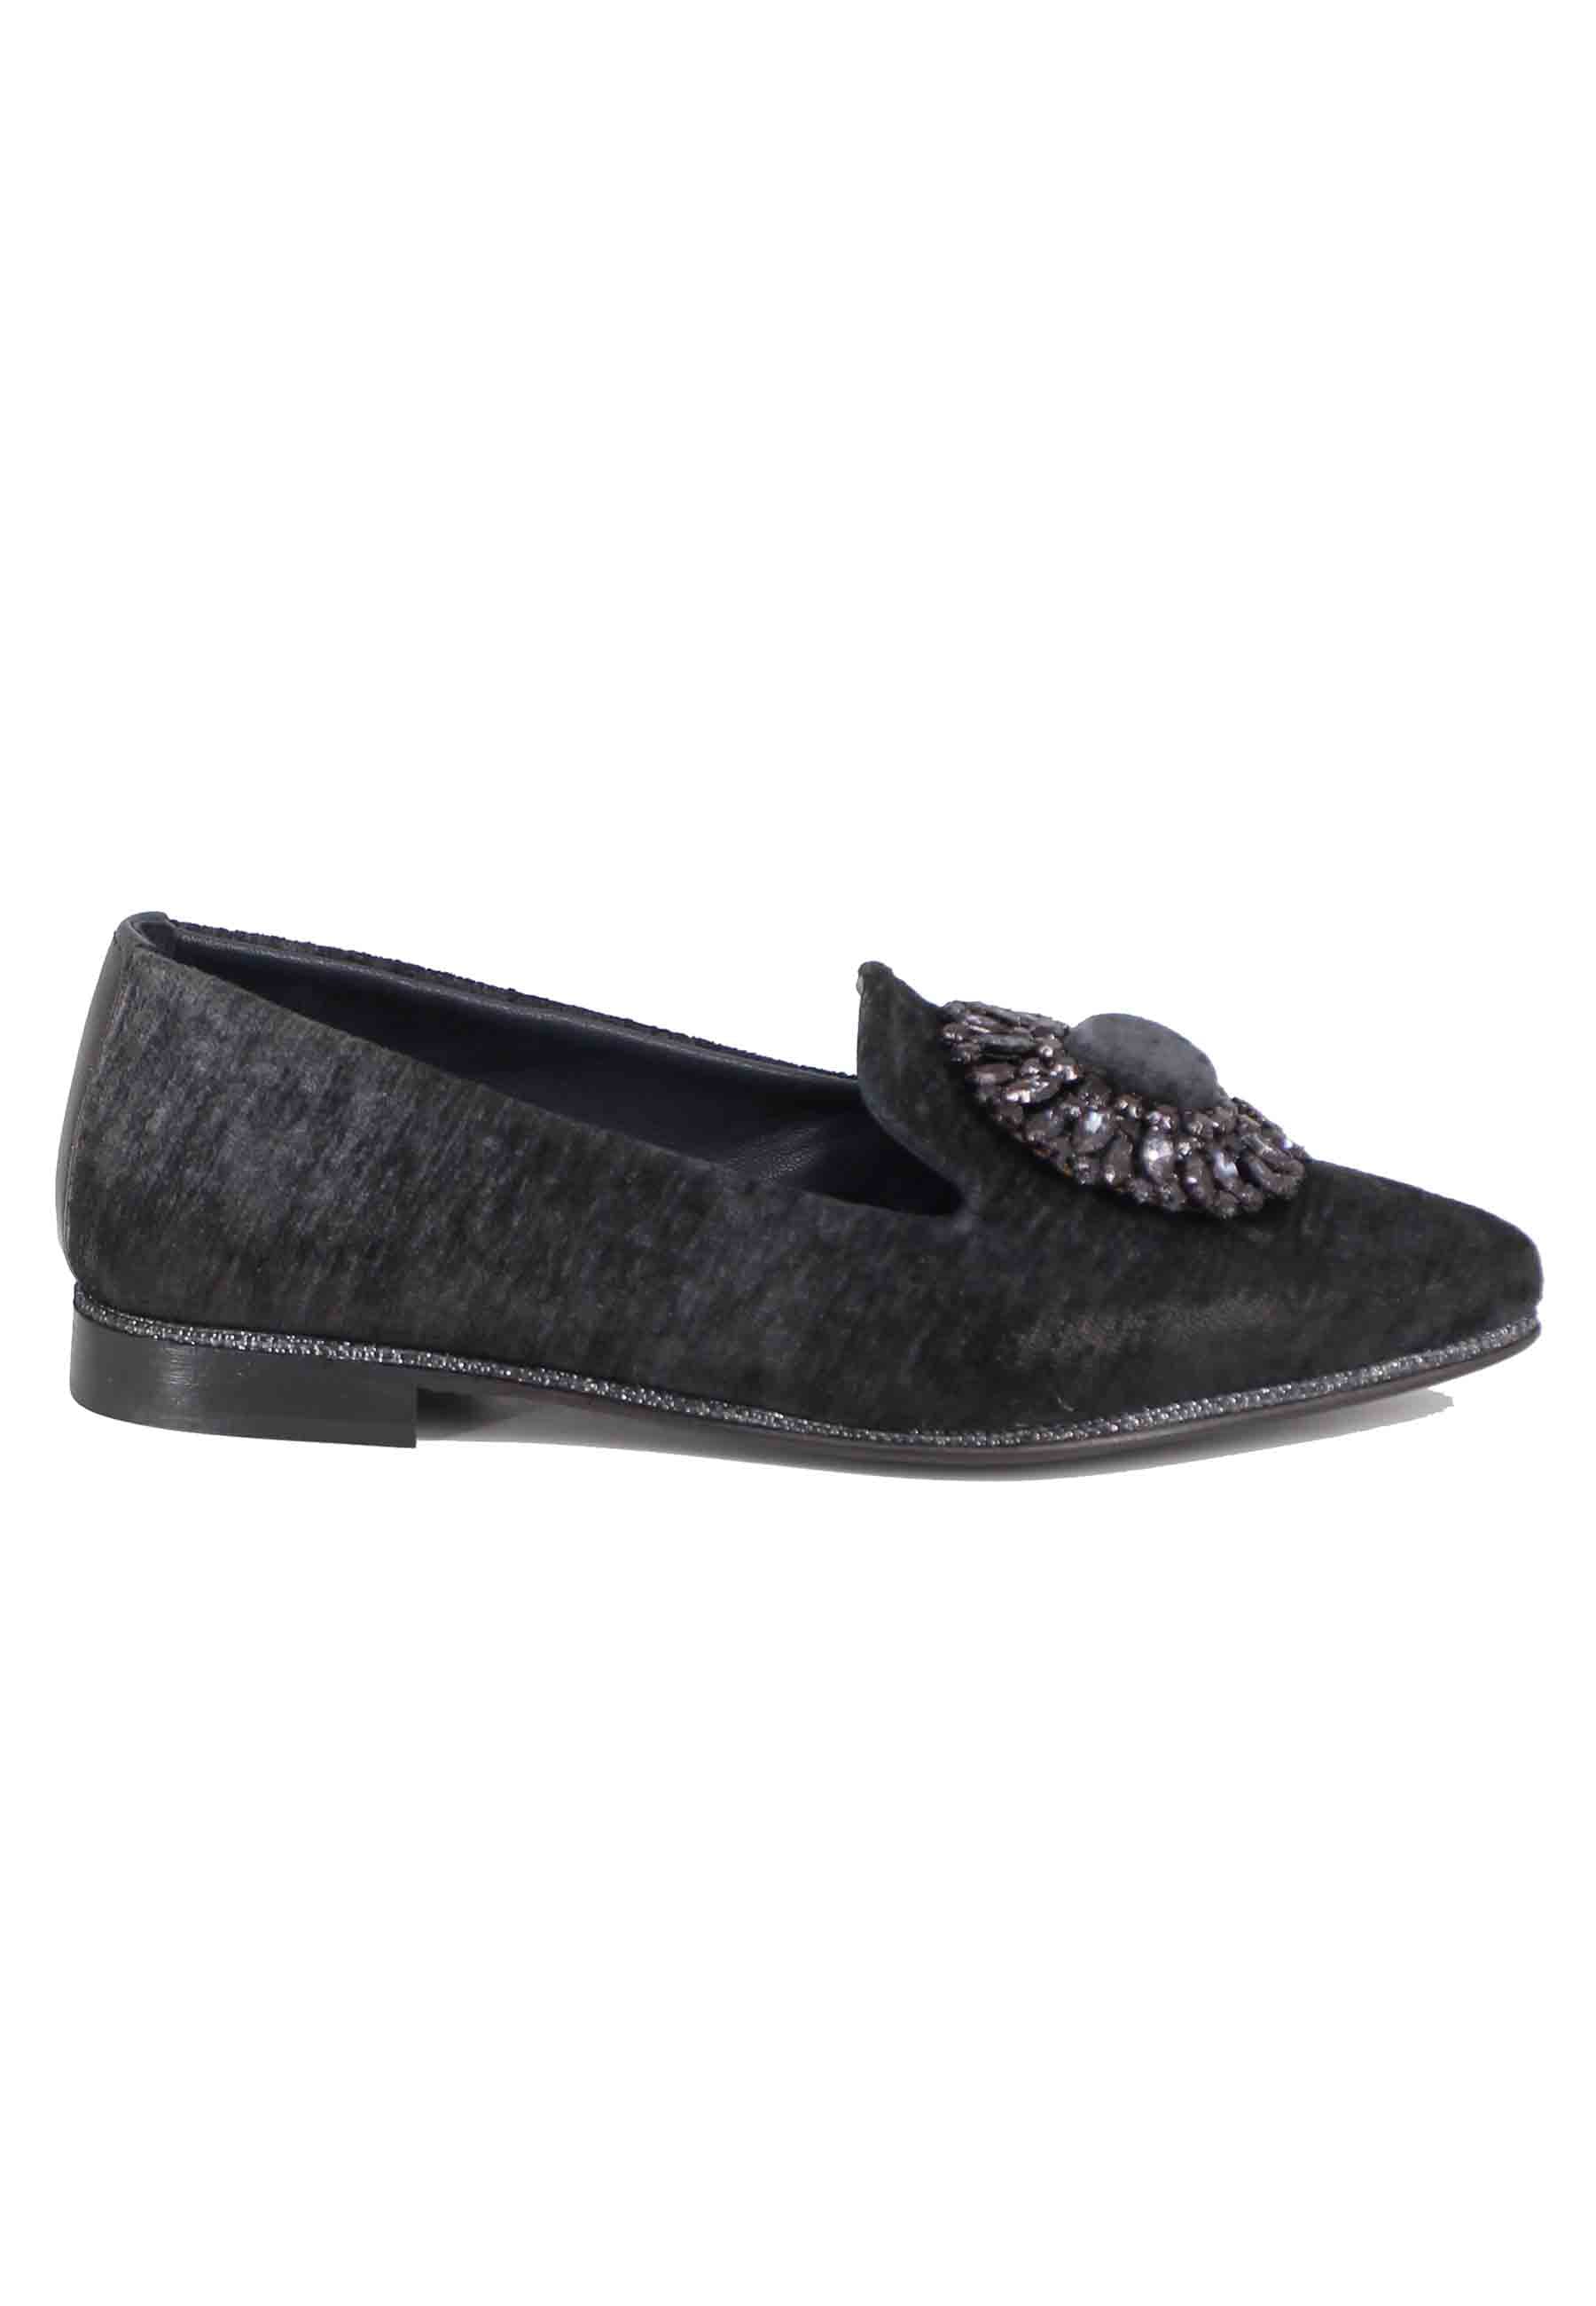 Women's black velvet loafers with buckle and low heel